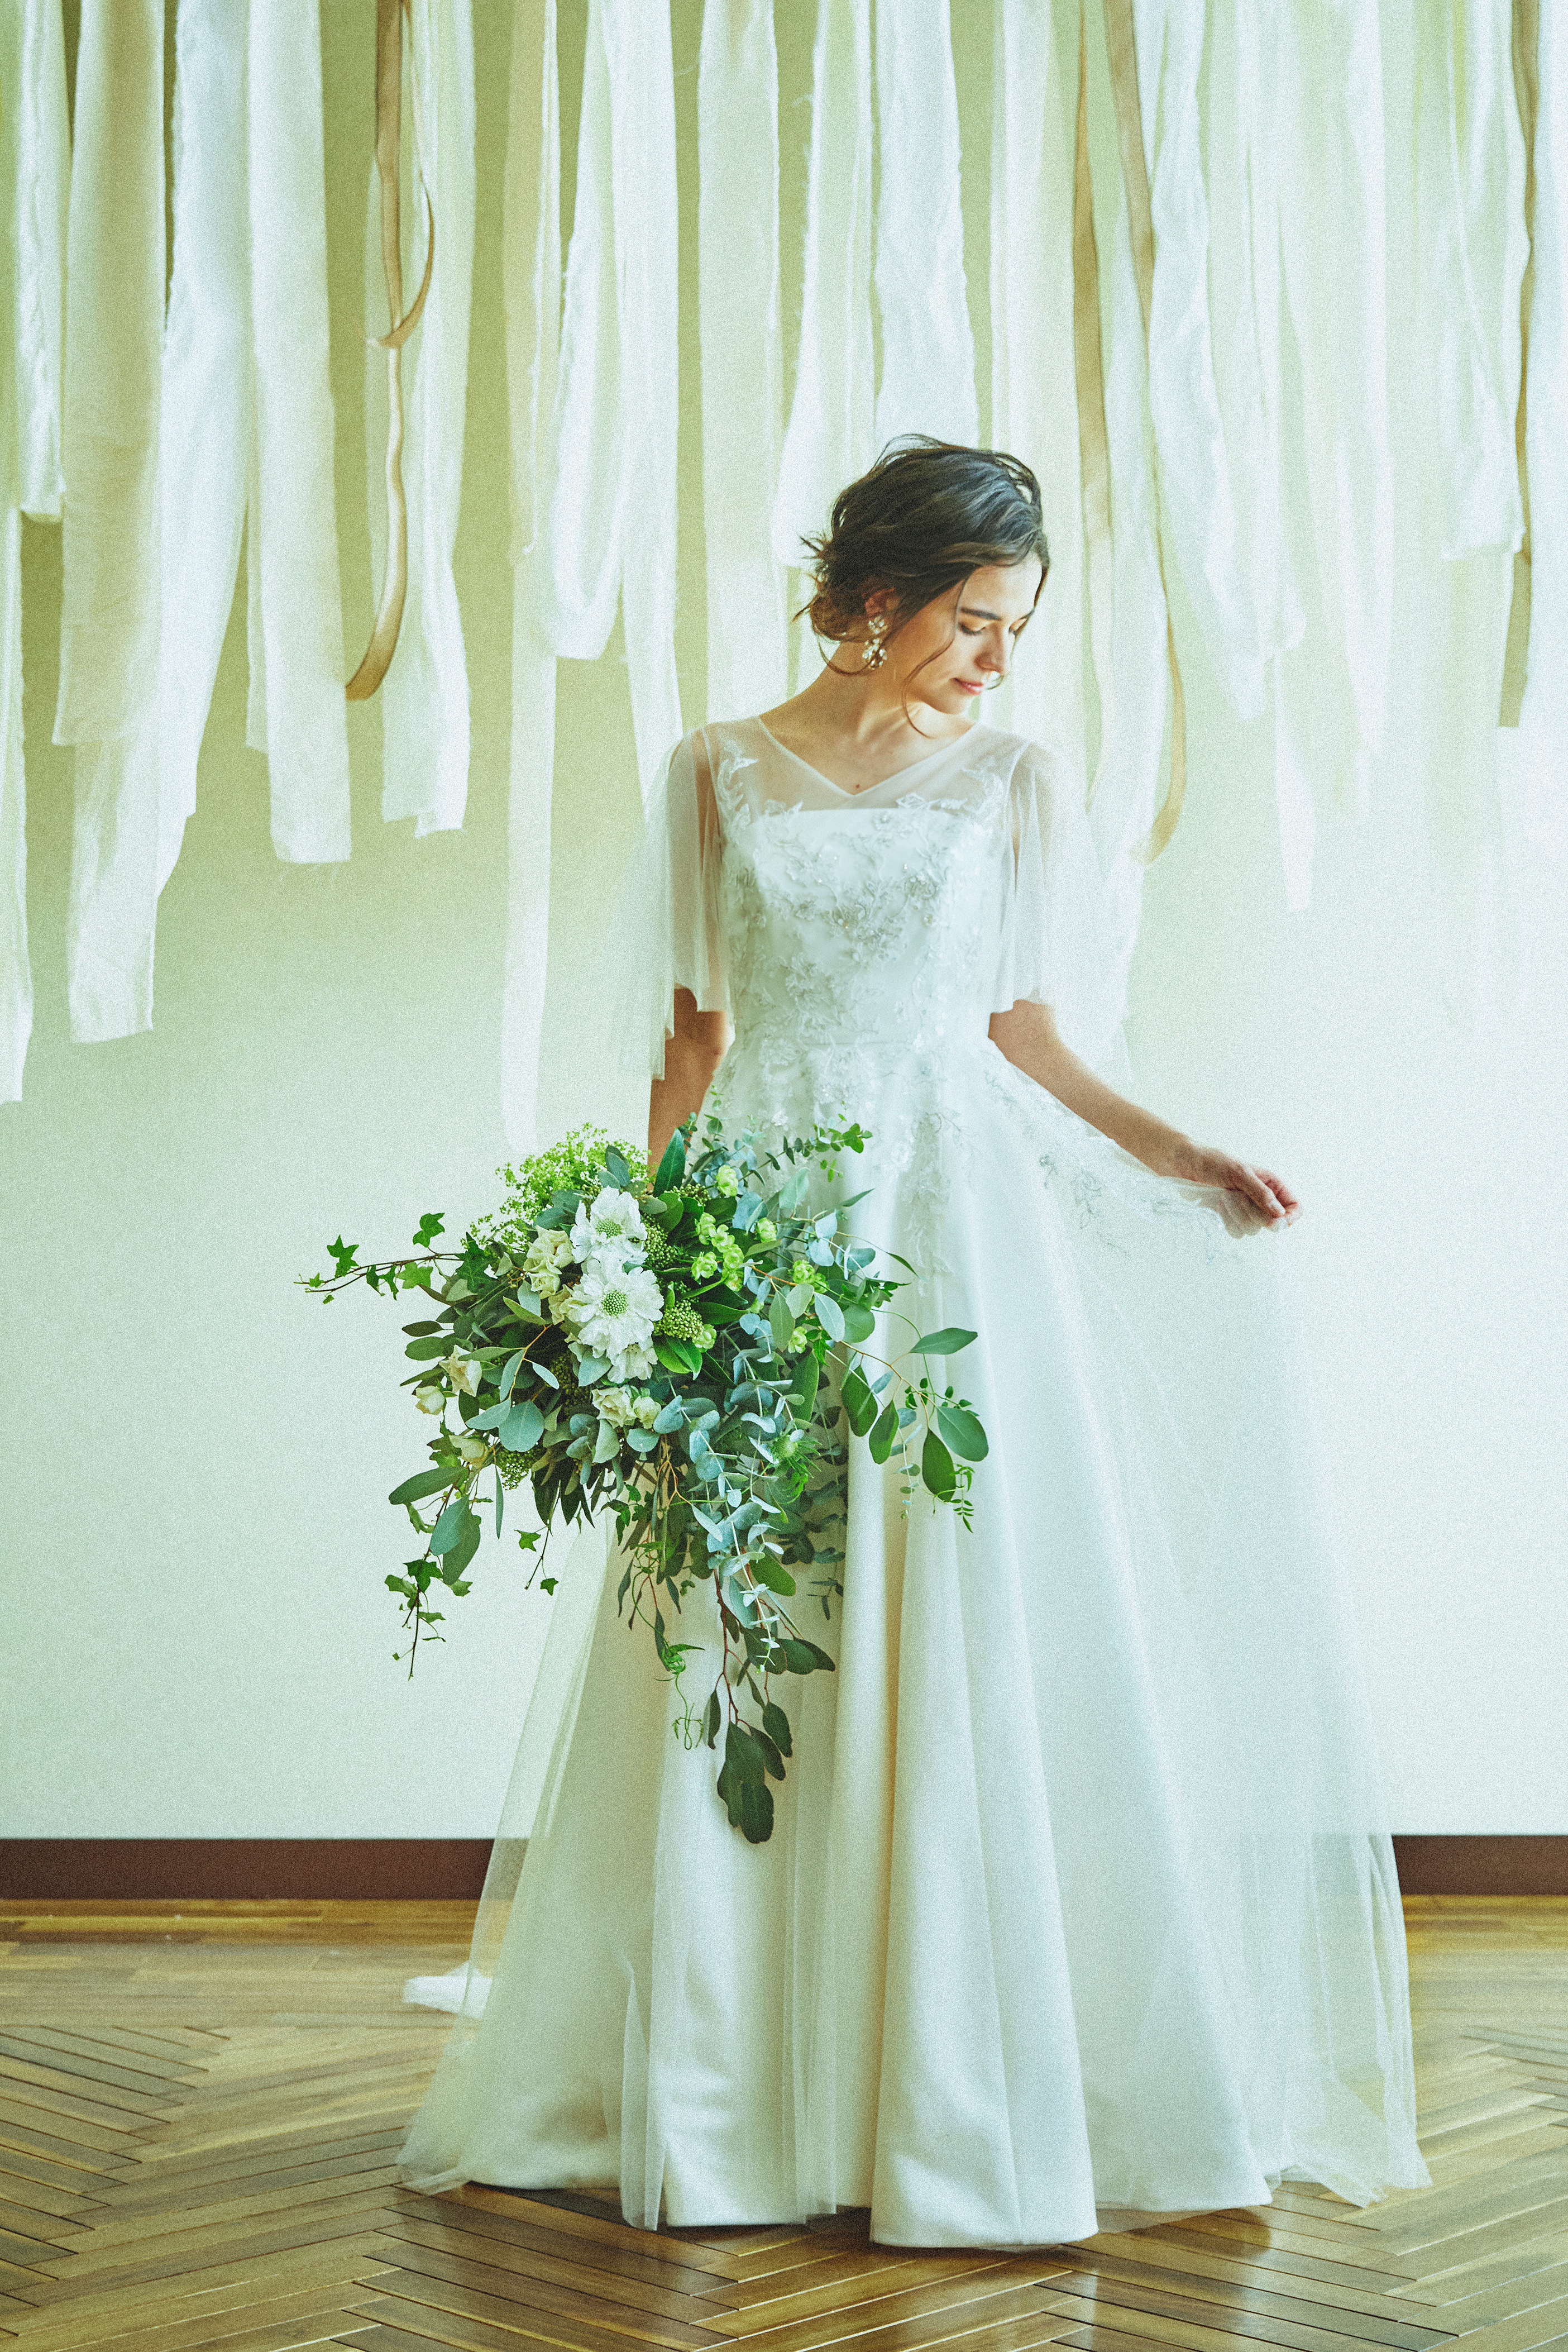 shop blog | ウェディングドレスはLOVE WEDDING by DRESS HOLIC